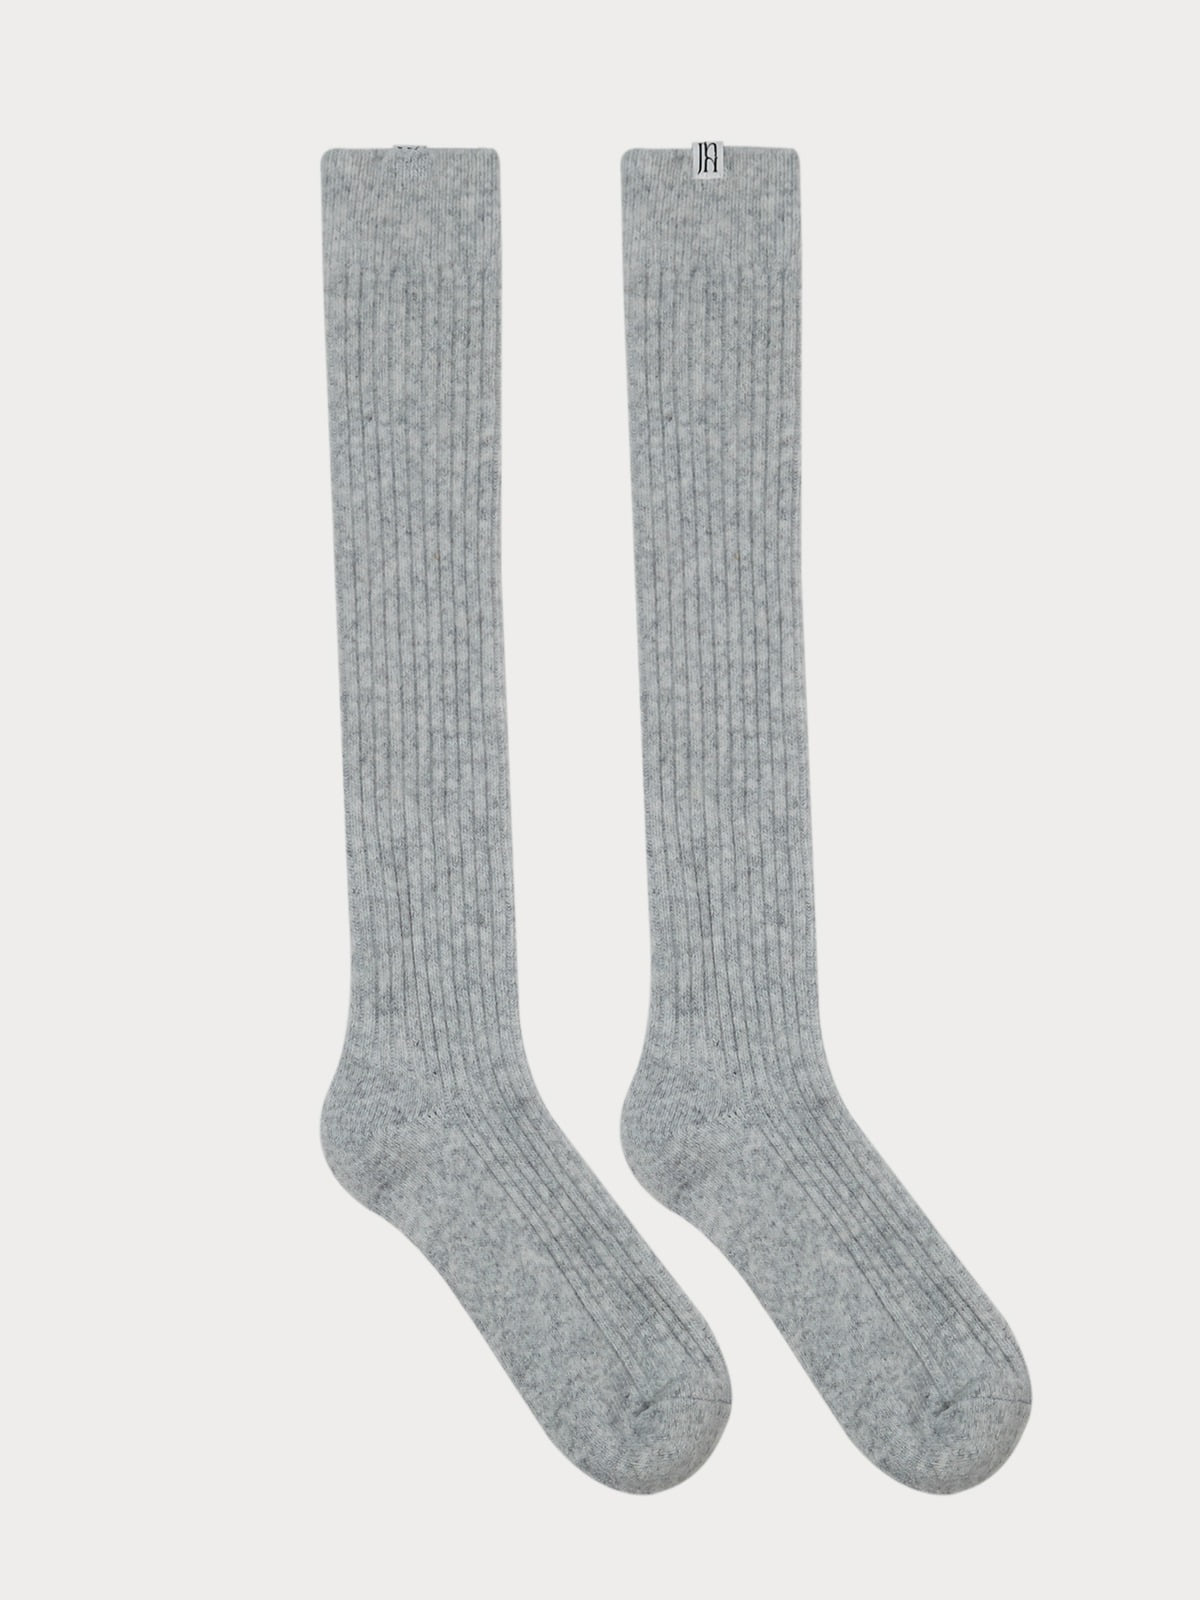 010 Cashmere Knee Knit Socks (Grey)